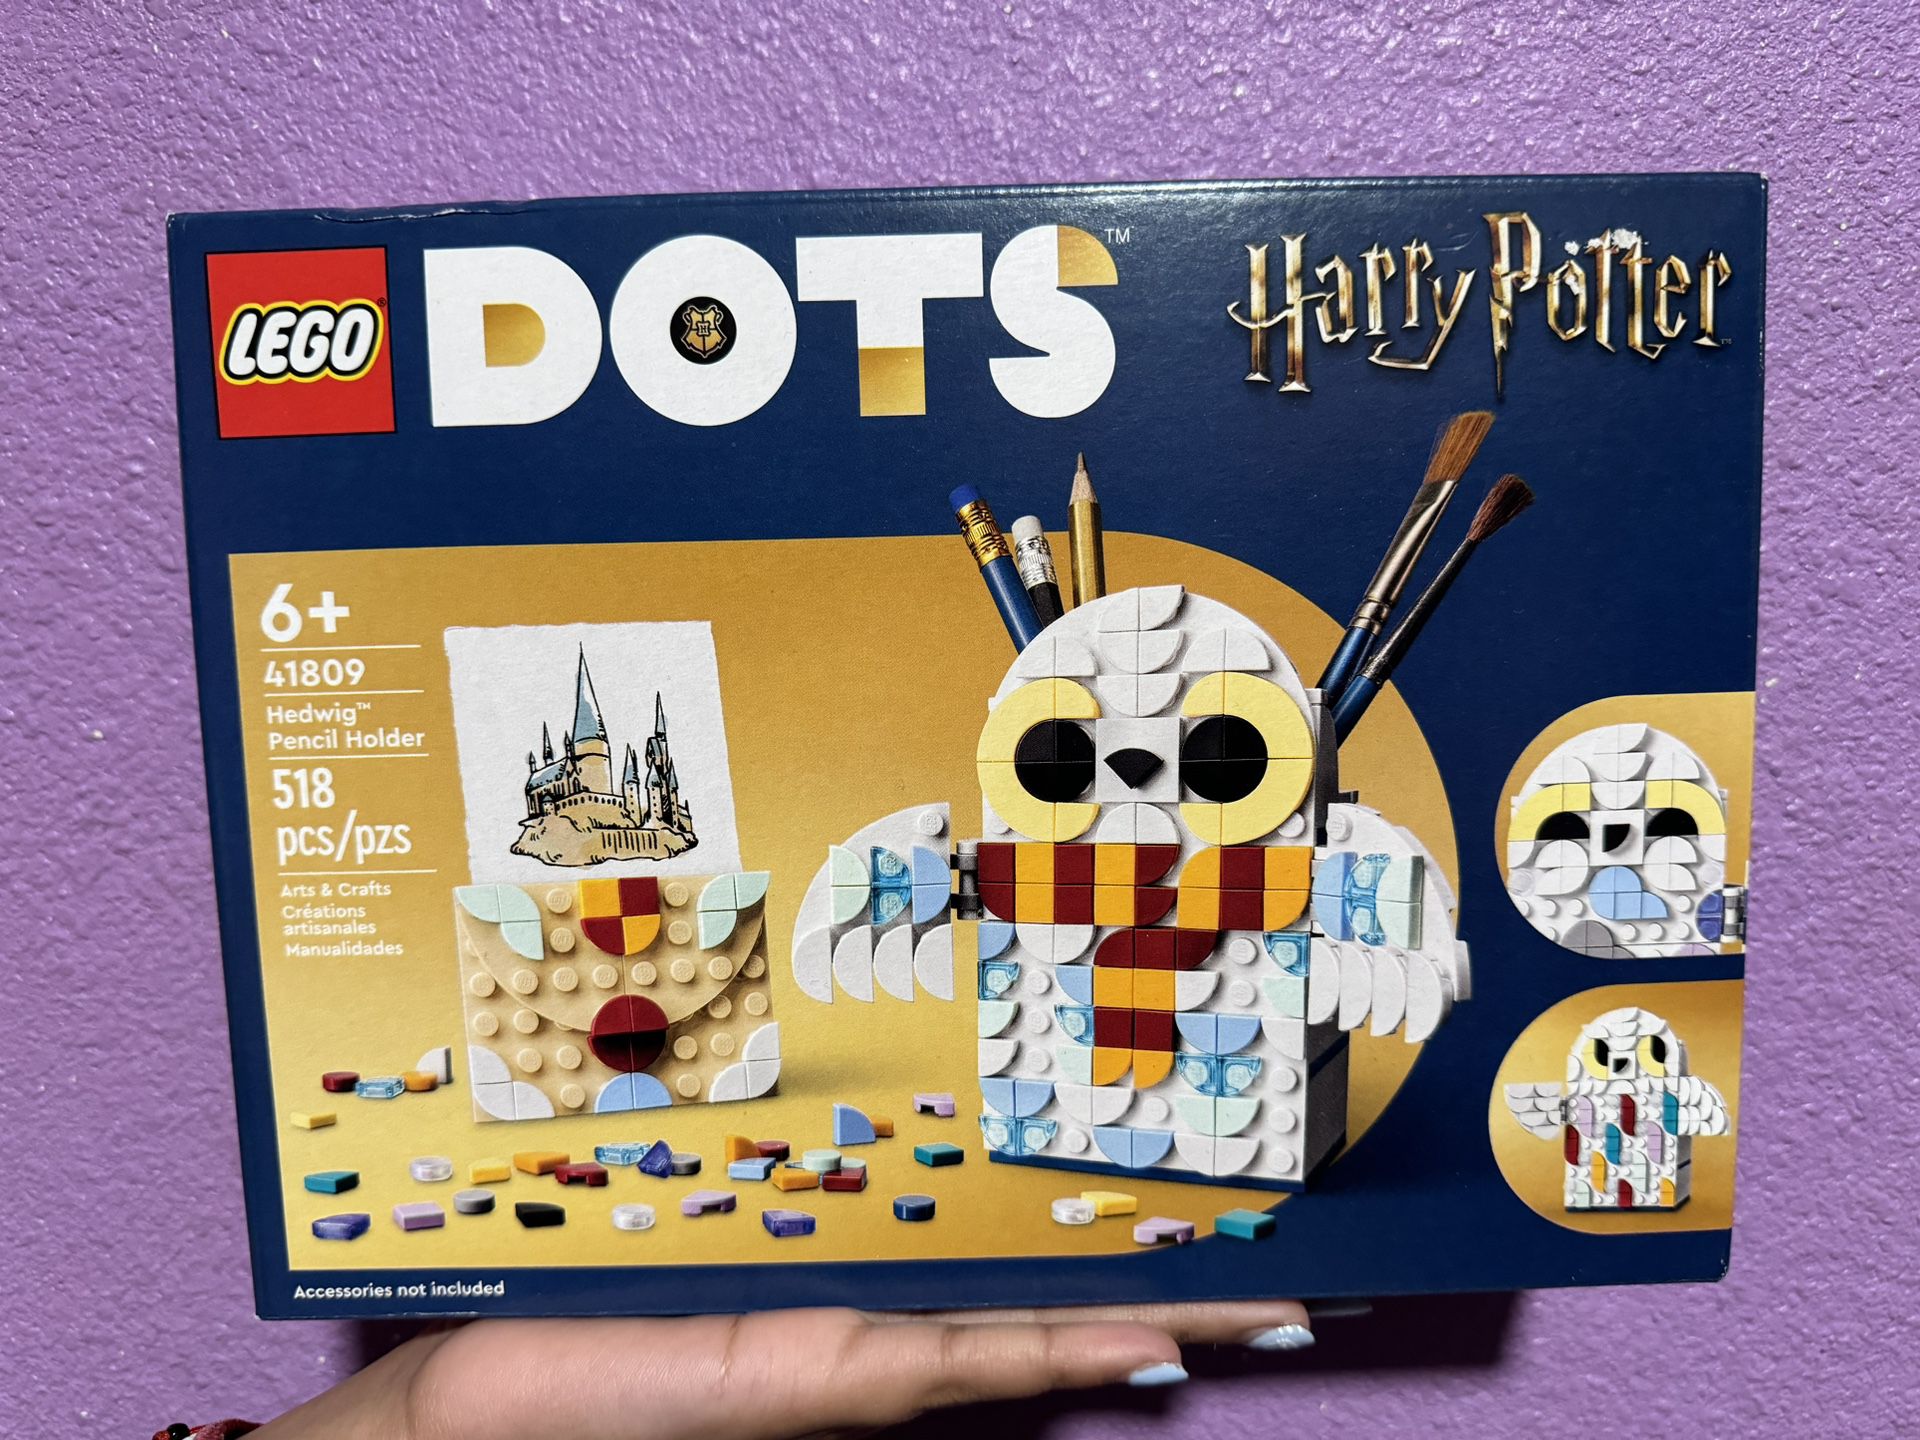 Harry Potter DOTS LEGO set 